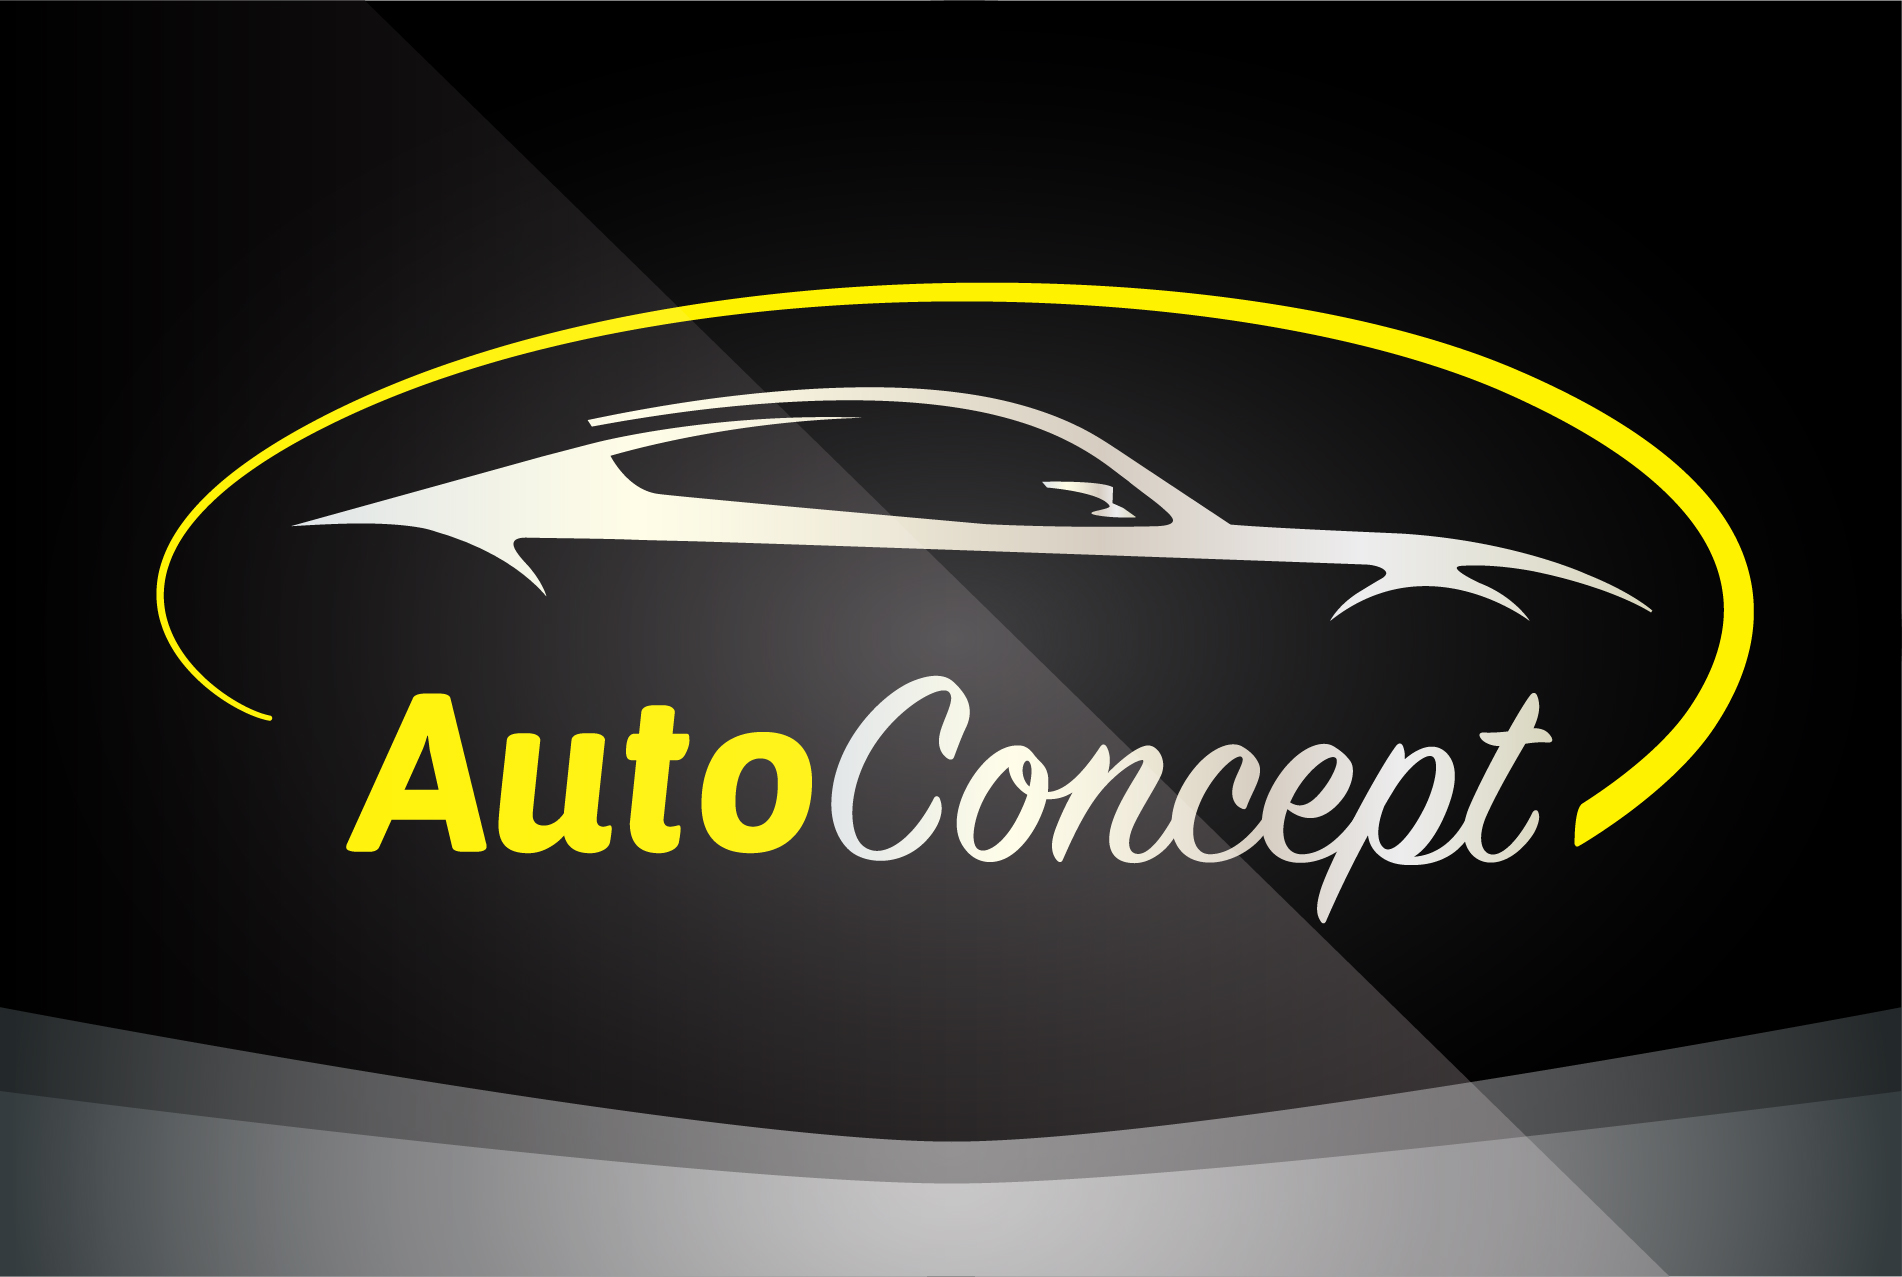 Auto company logos creative vector 09 logos creative company auto   